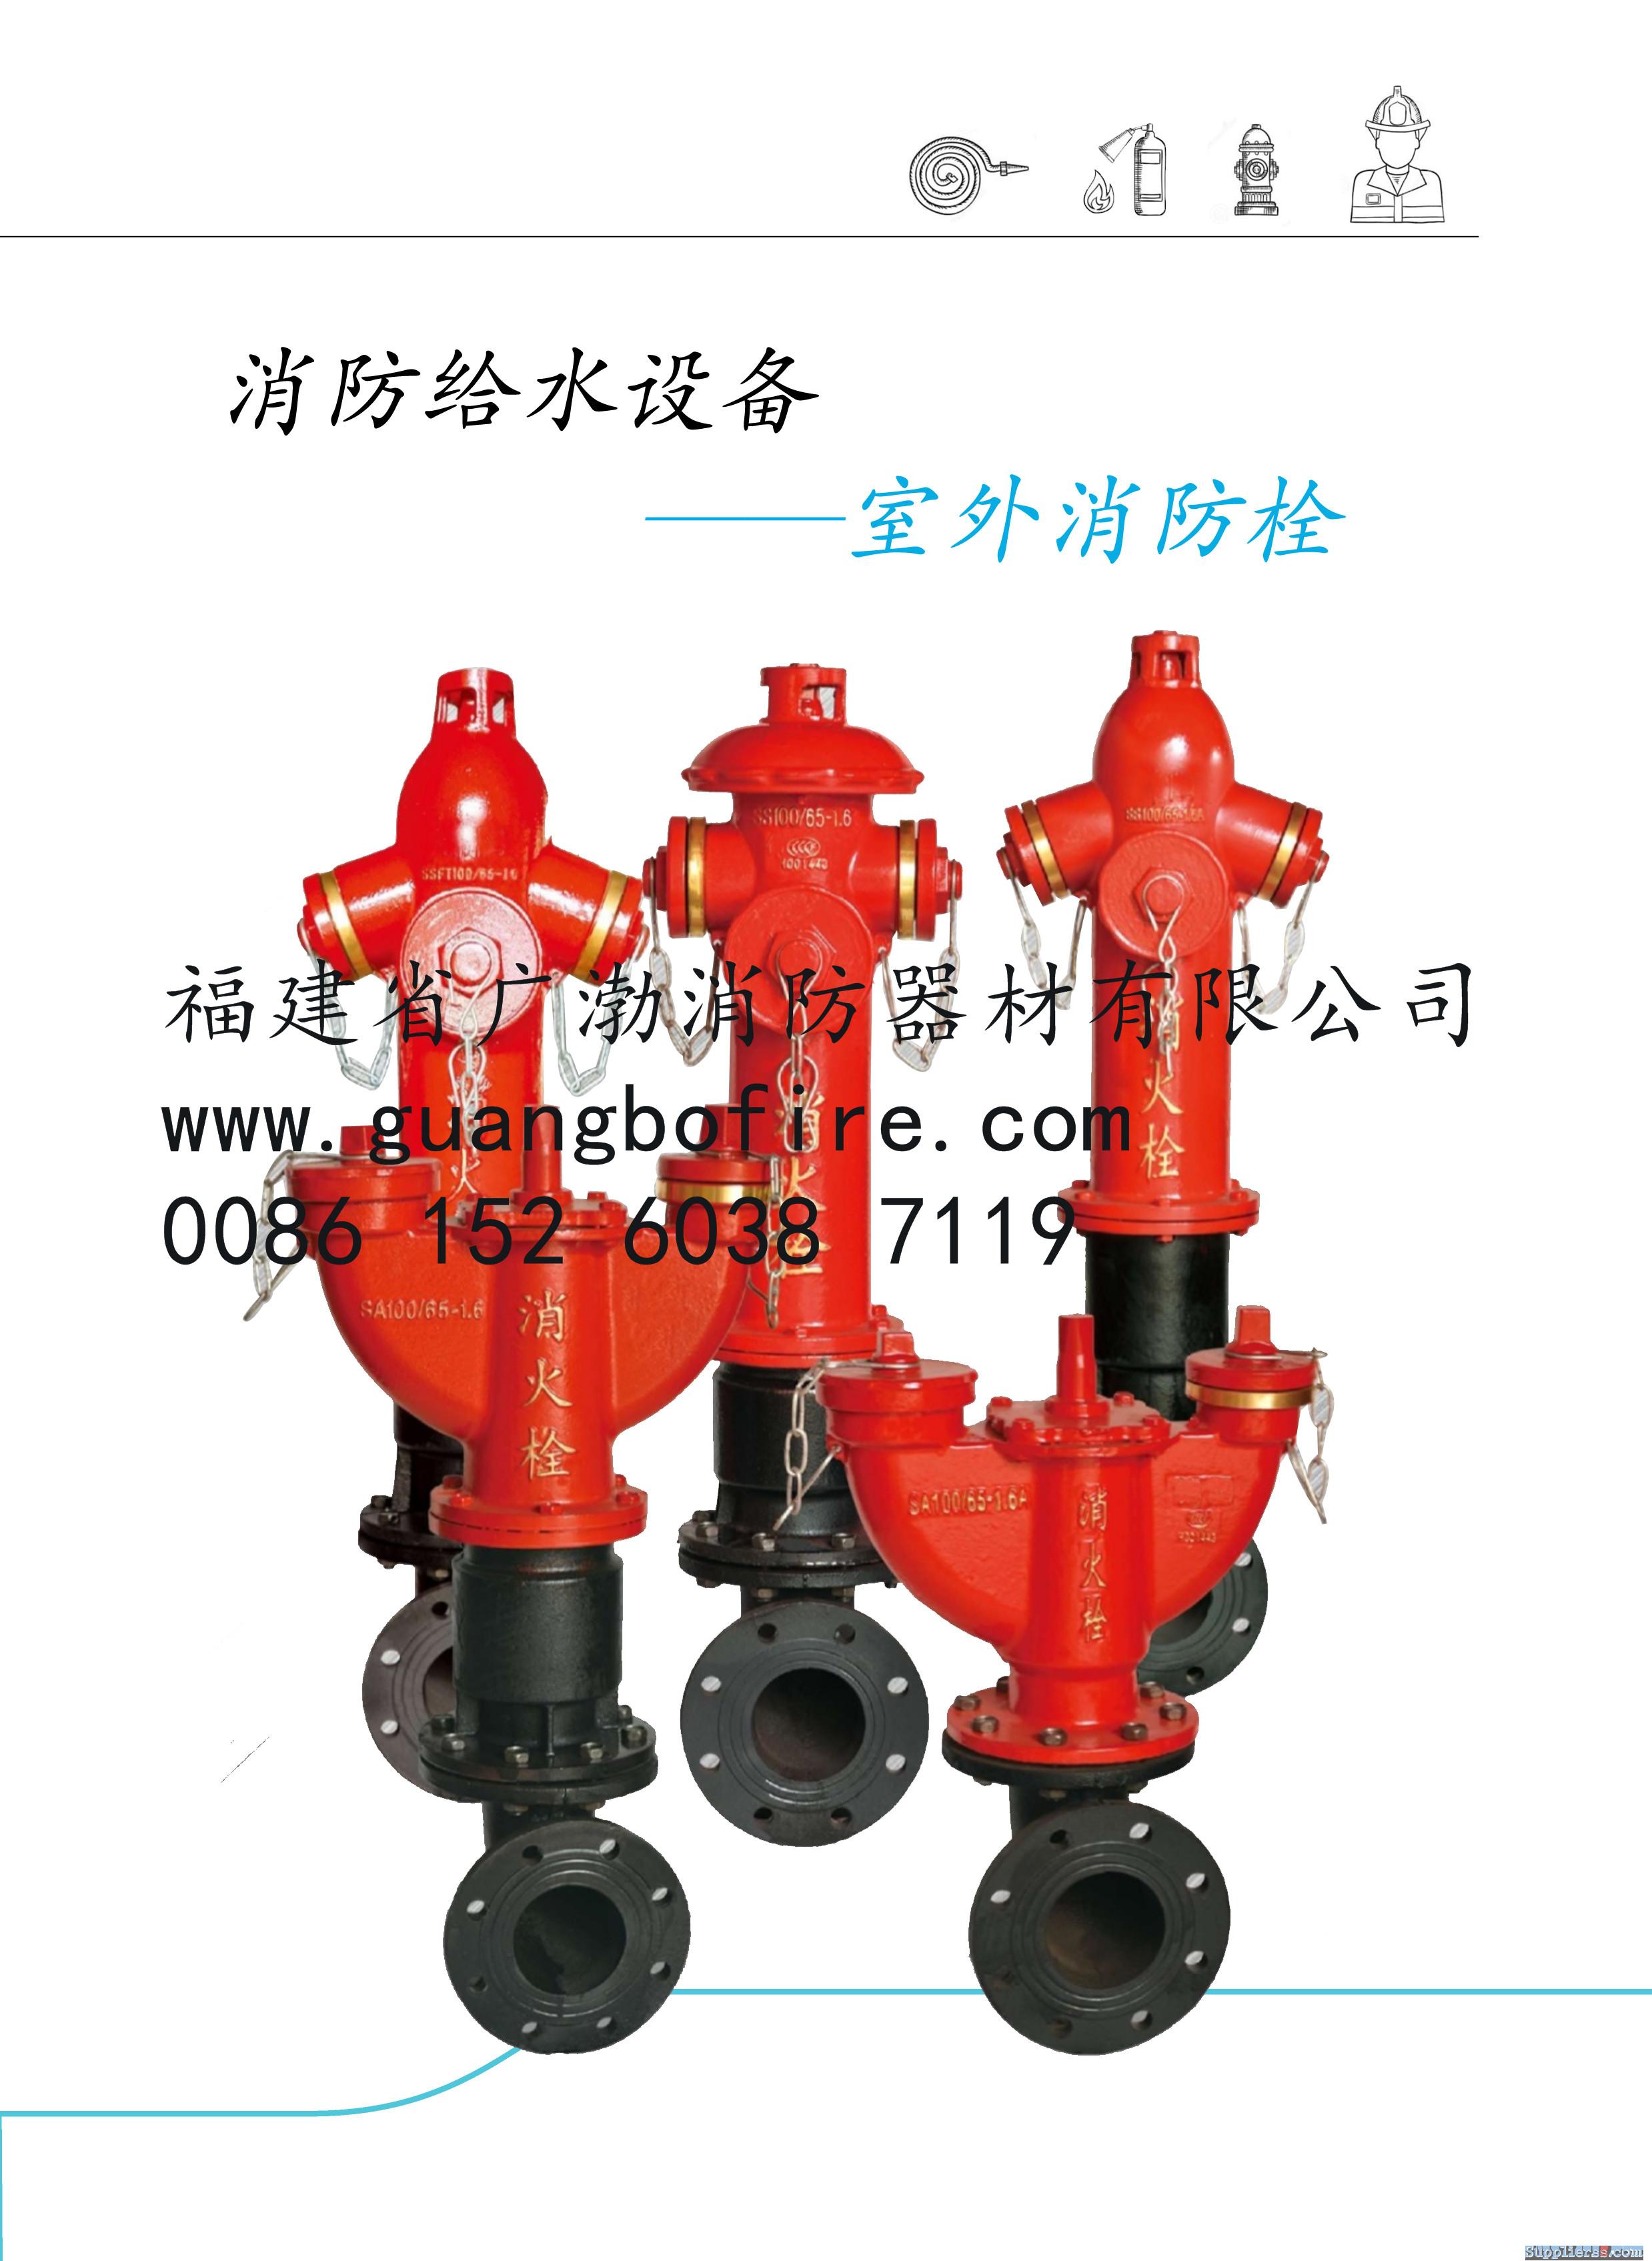 Fire Outdoor Aboveground Underground Hydrant China Fujian Guangbo